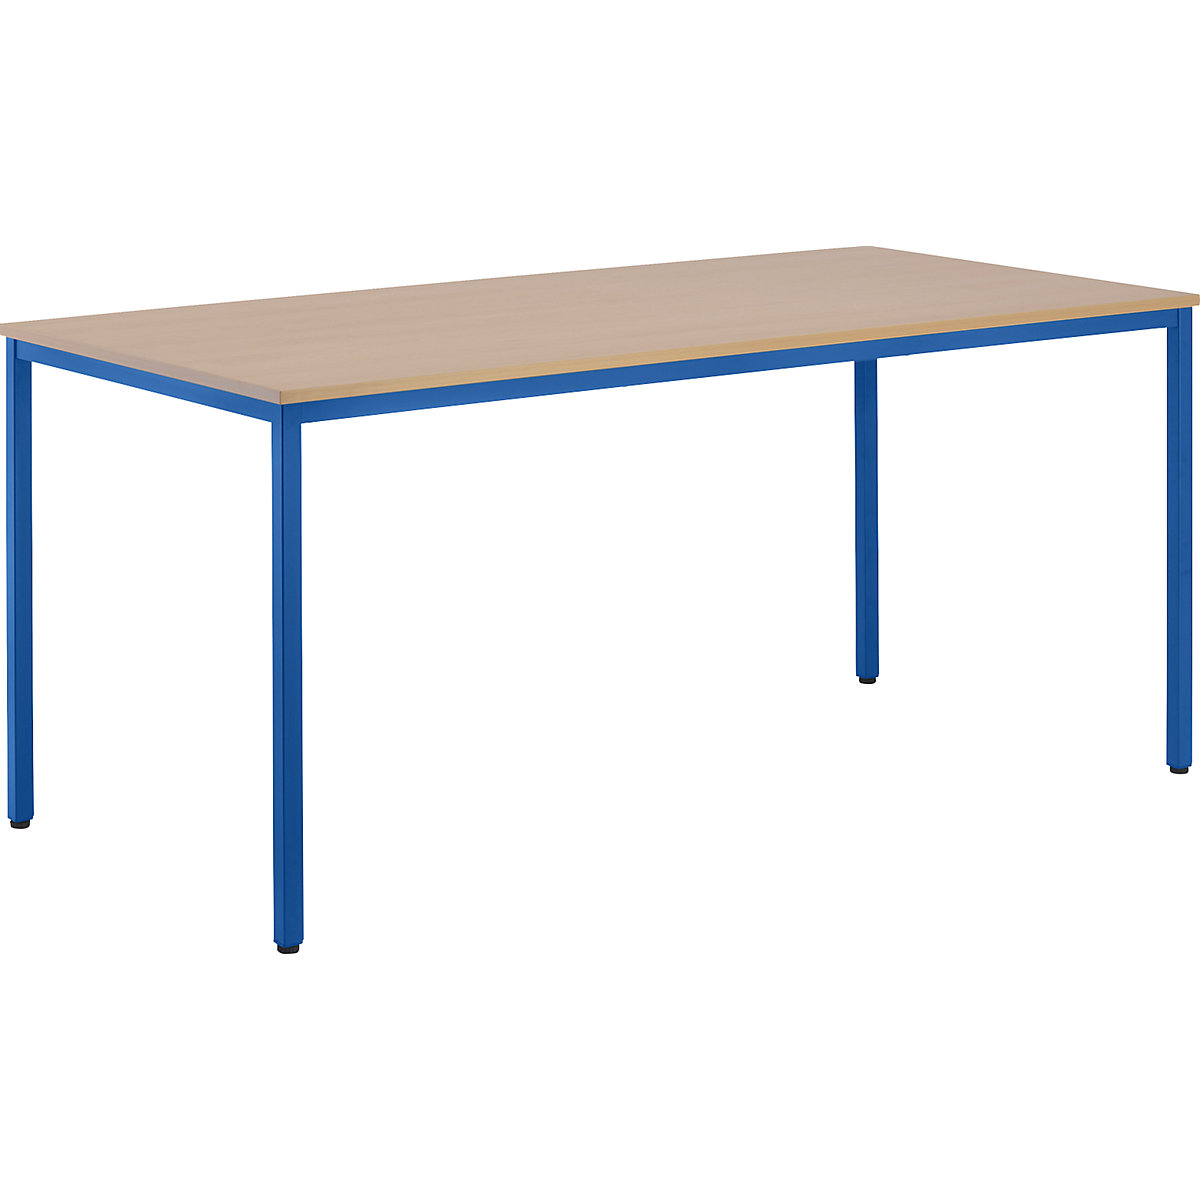 Multifunctionele tafel – eurokraft basic, h x b x d = 720 x 1600 x 800 mm, blad beukenhoutdecor, frame gentiaanblauw